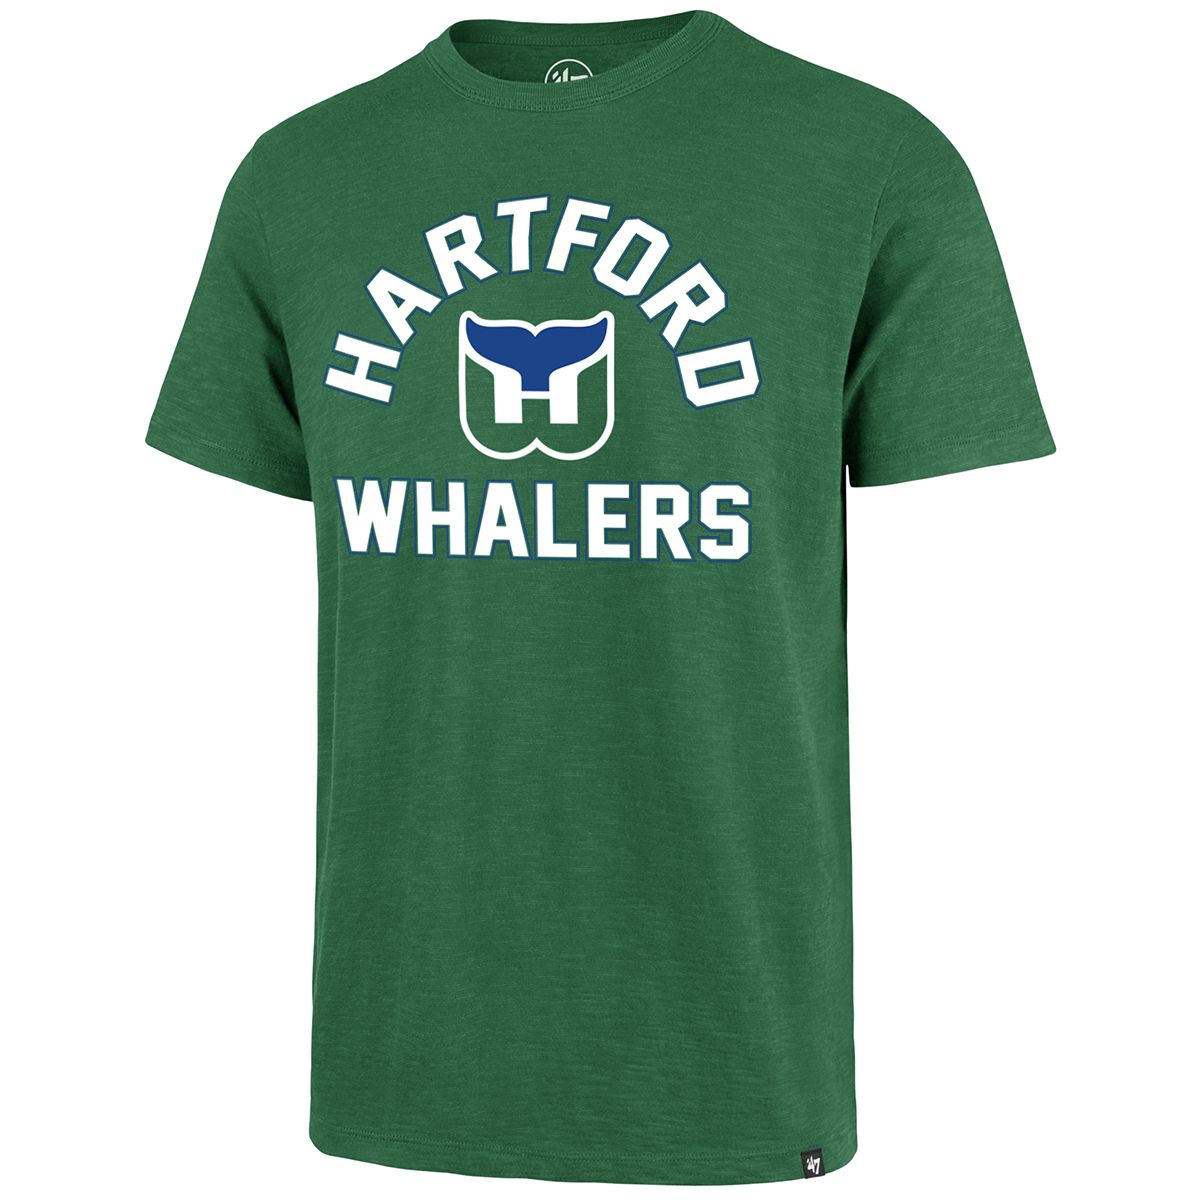 Hartford Whalers - Bob's Stores